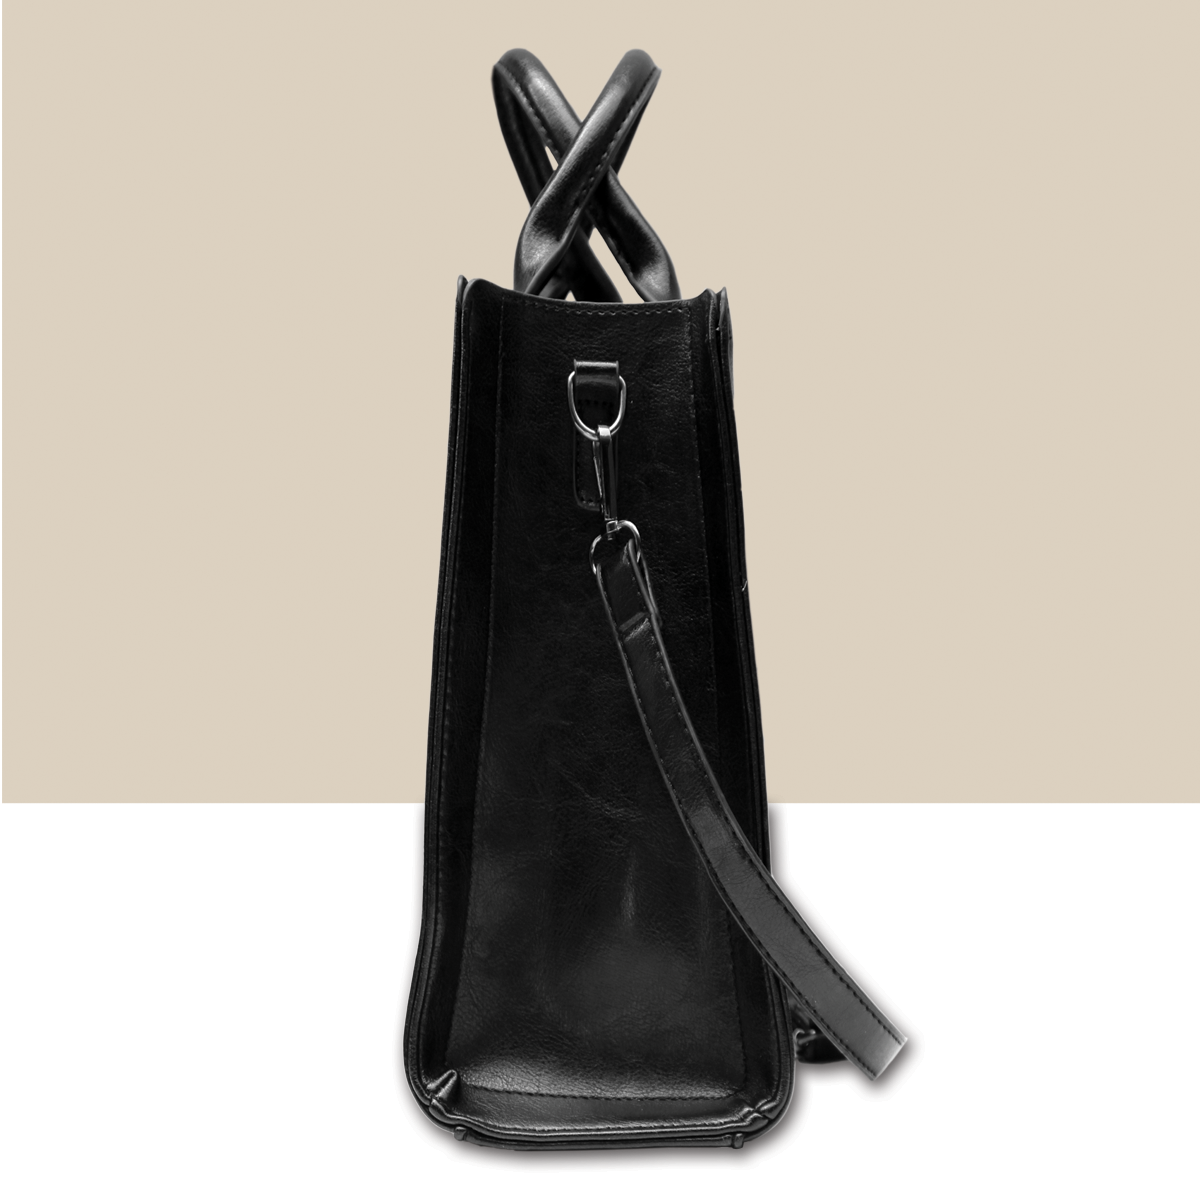 Shiba Inu Luxus Handtasche V2